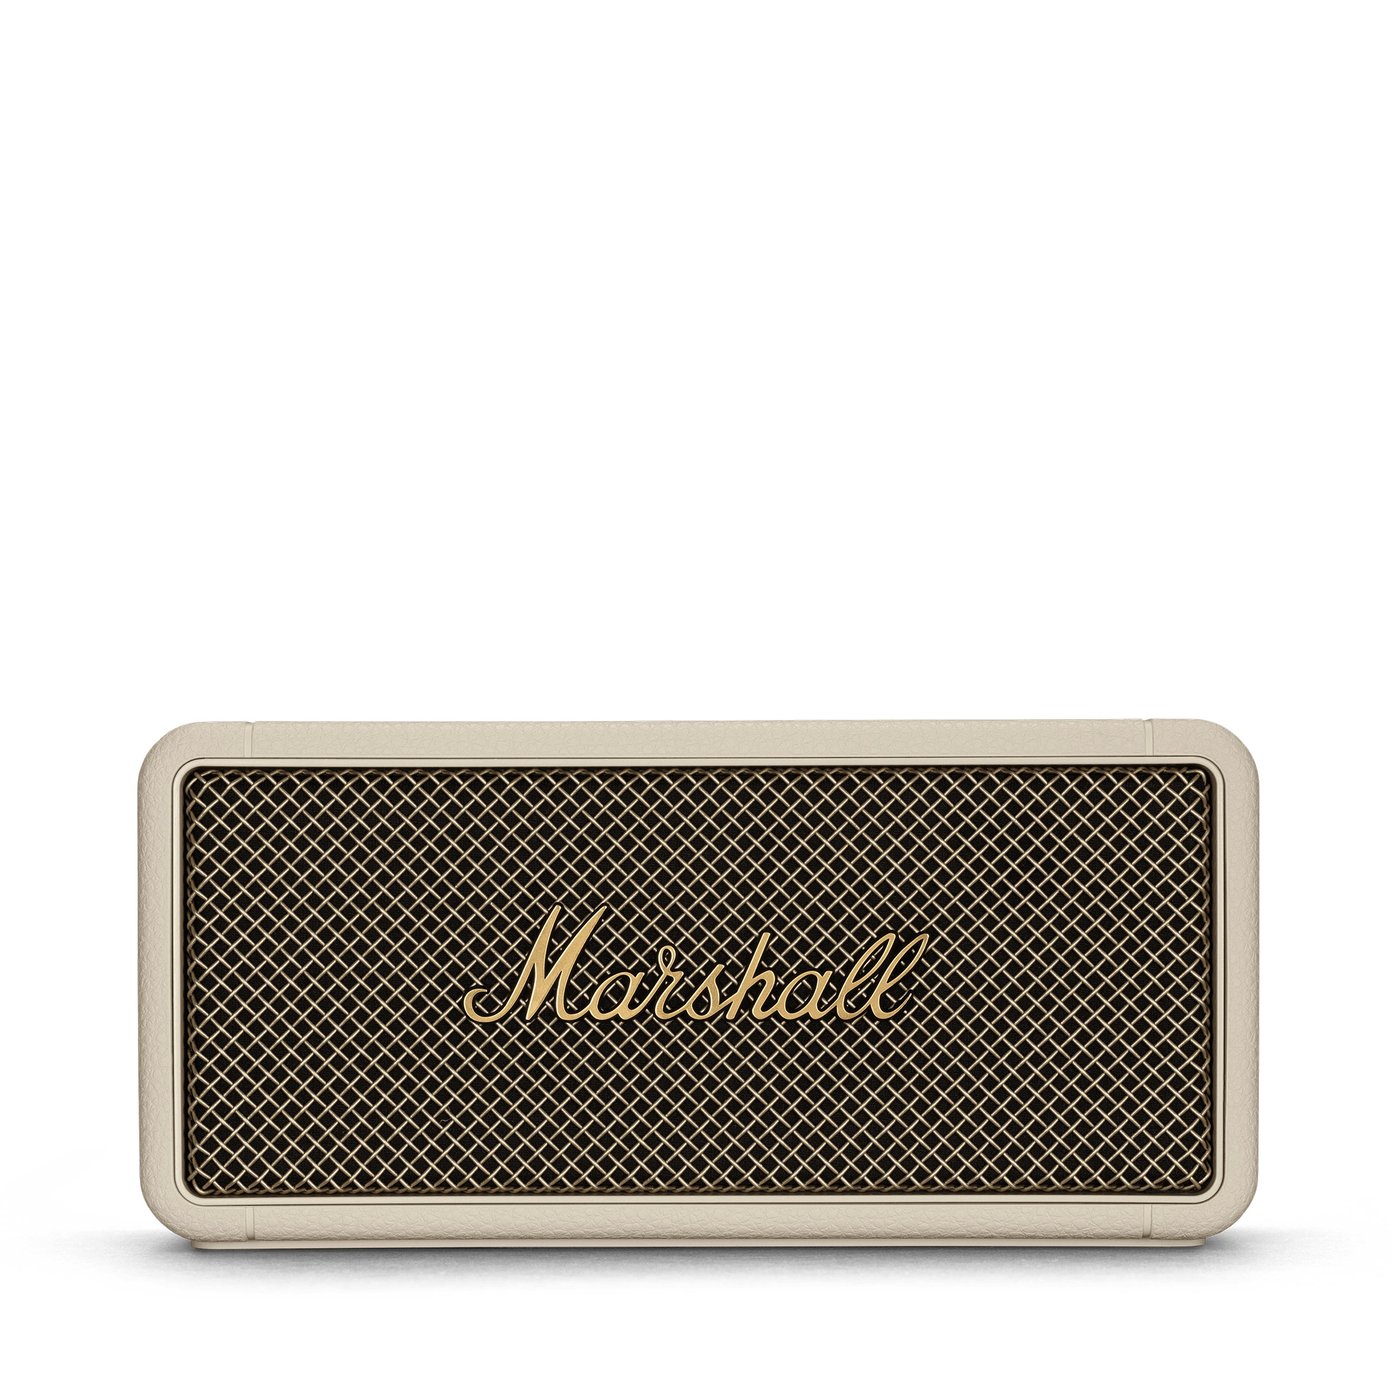 Buy Marshall Middleton Bluetooth speaker